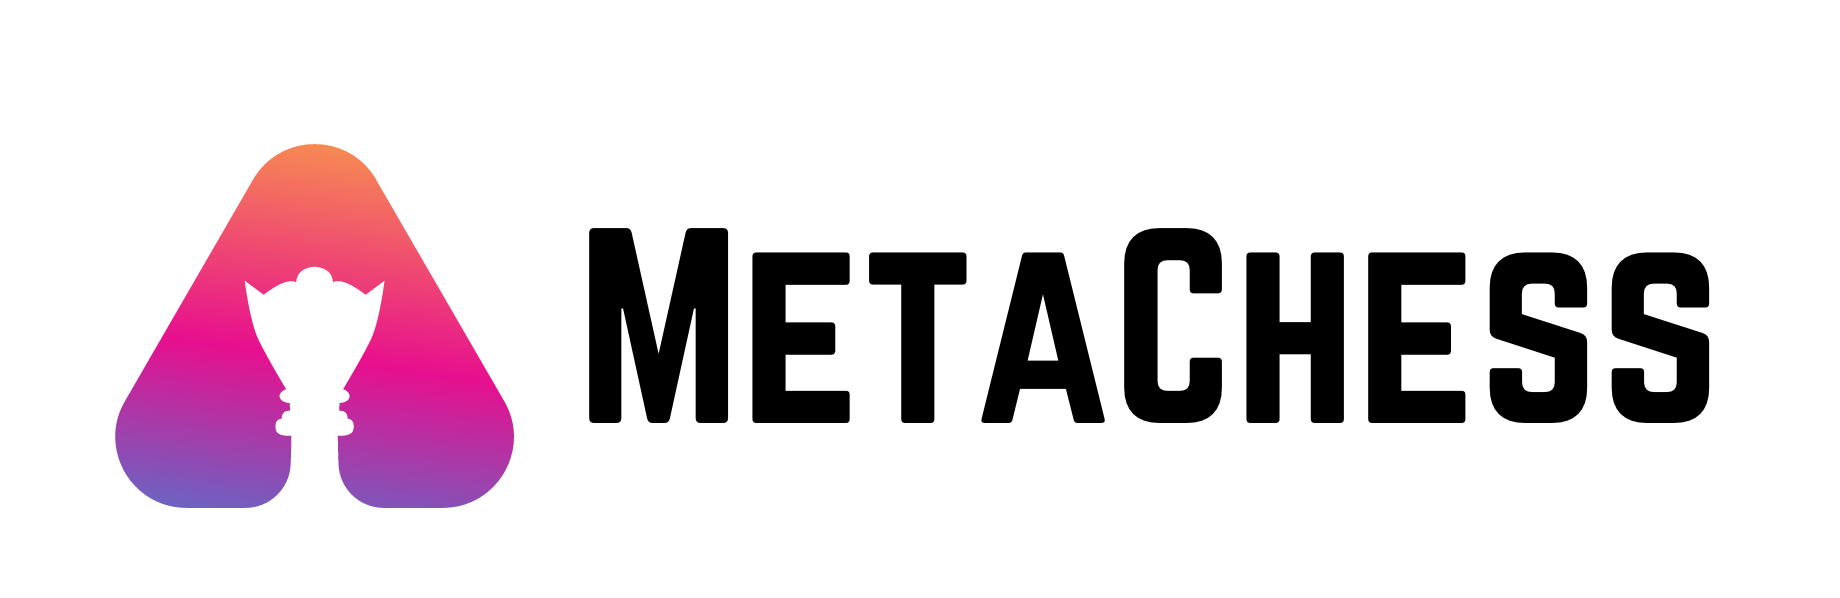 MetaChessTeam